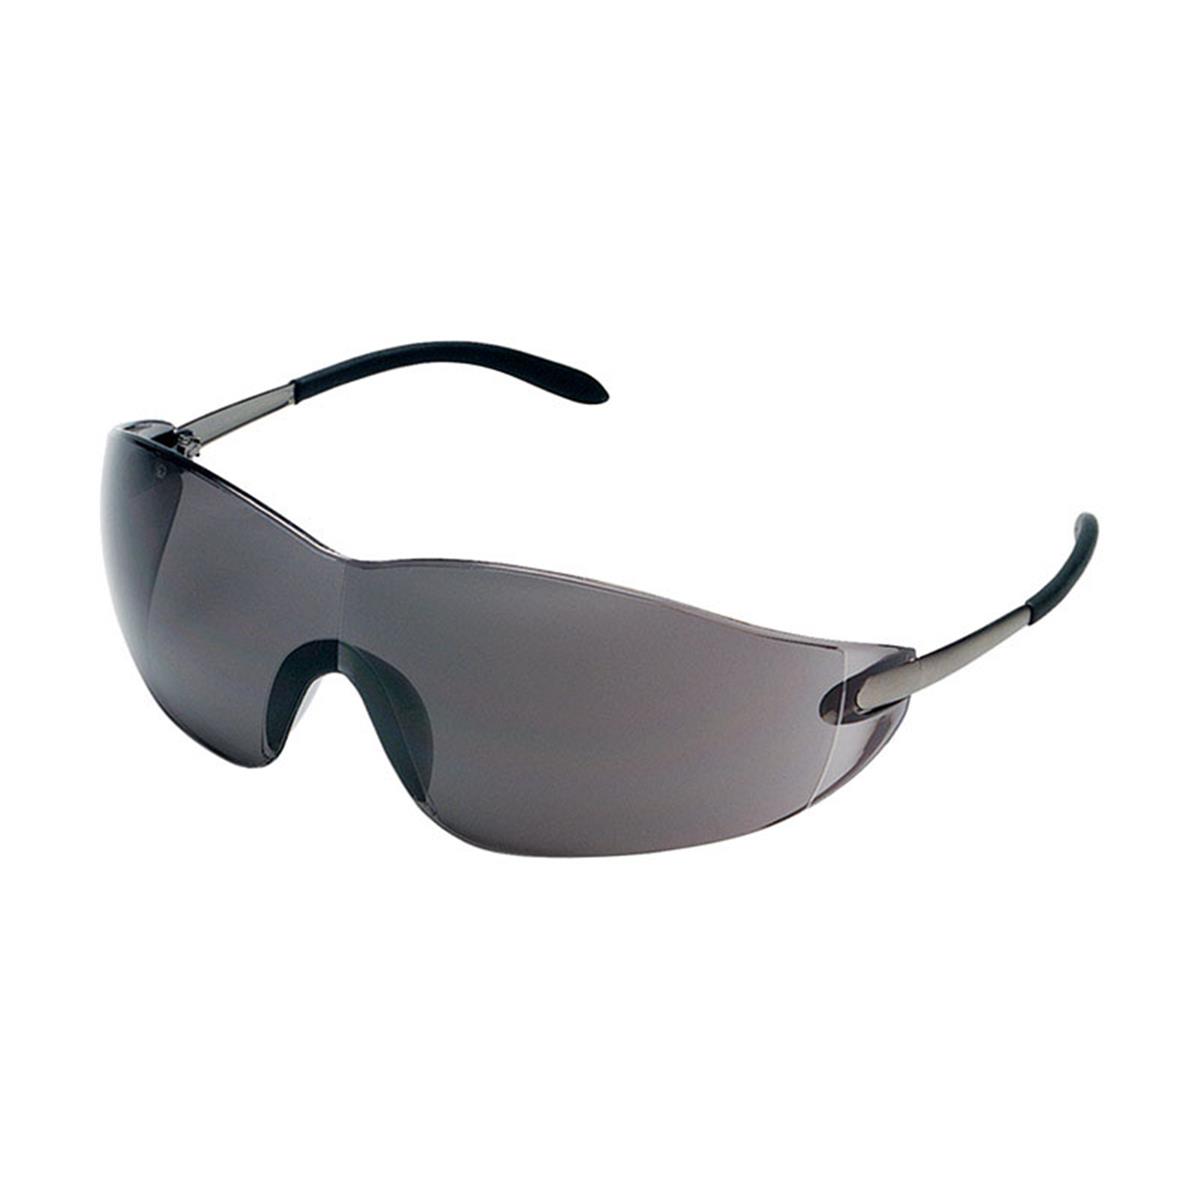 Mcr 2418309 Safety Blackjack Multi-purpose Safety Glasses With Frame, Gray Lens Frame - Pack Of 12